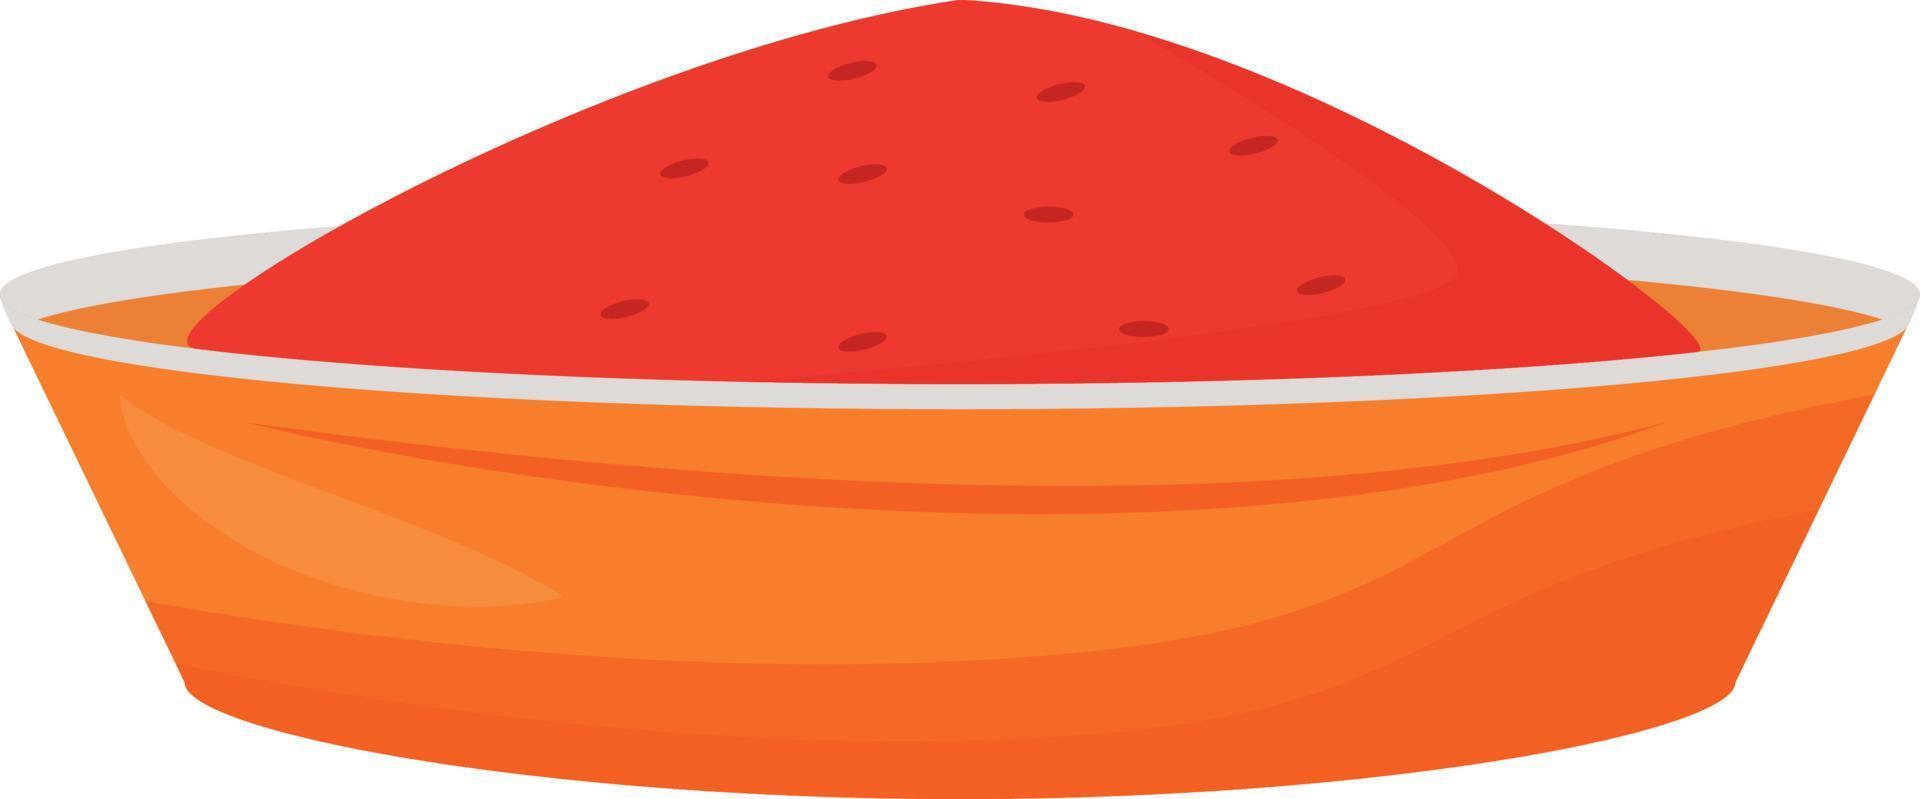 comida roja en un tazón de naranja elemento de vector de color semiplano